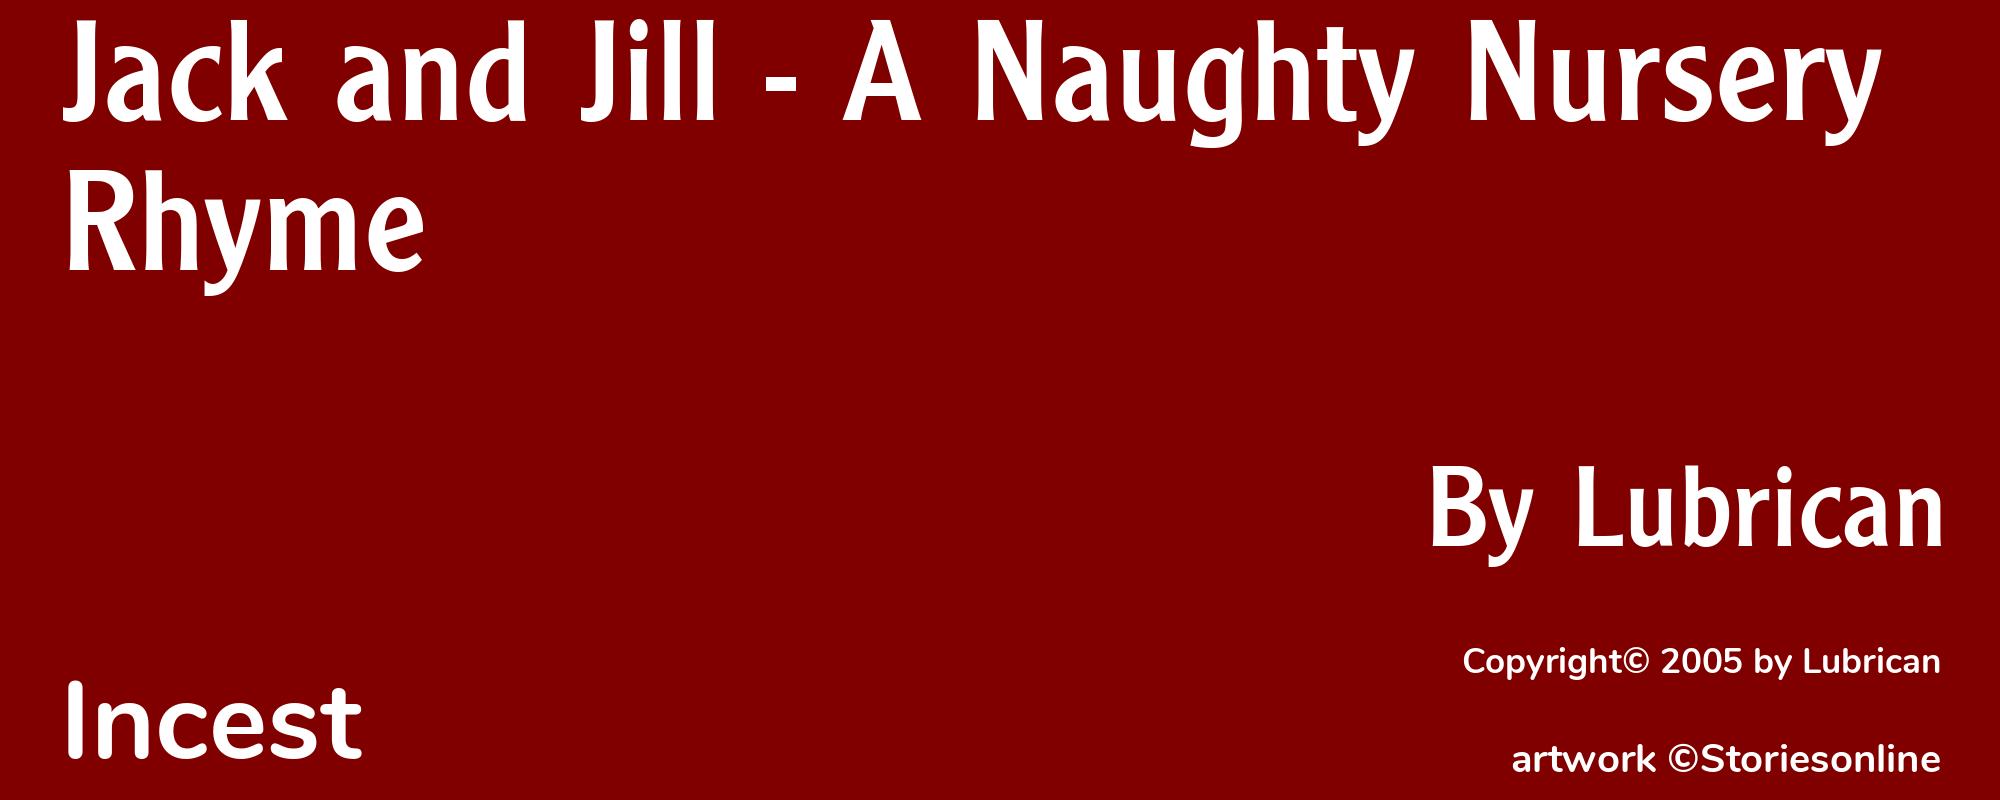 Jack and Jill - A Naughty Nursery Rhyme - Cover